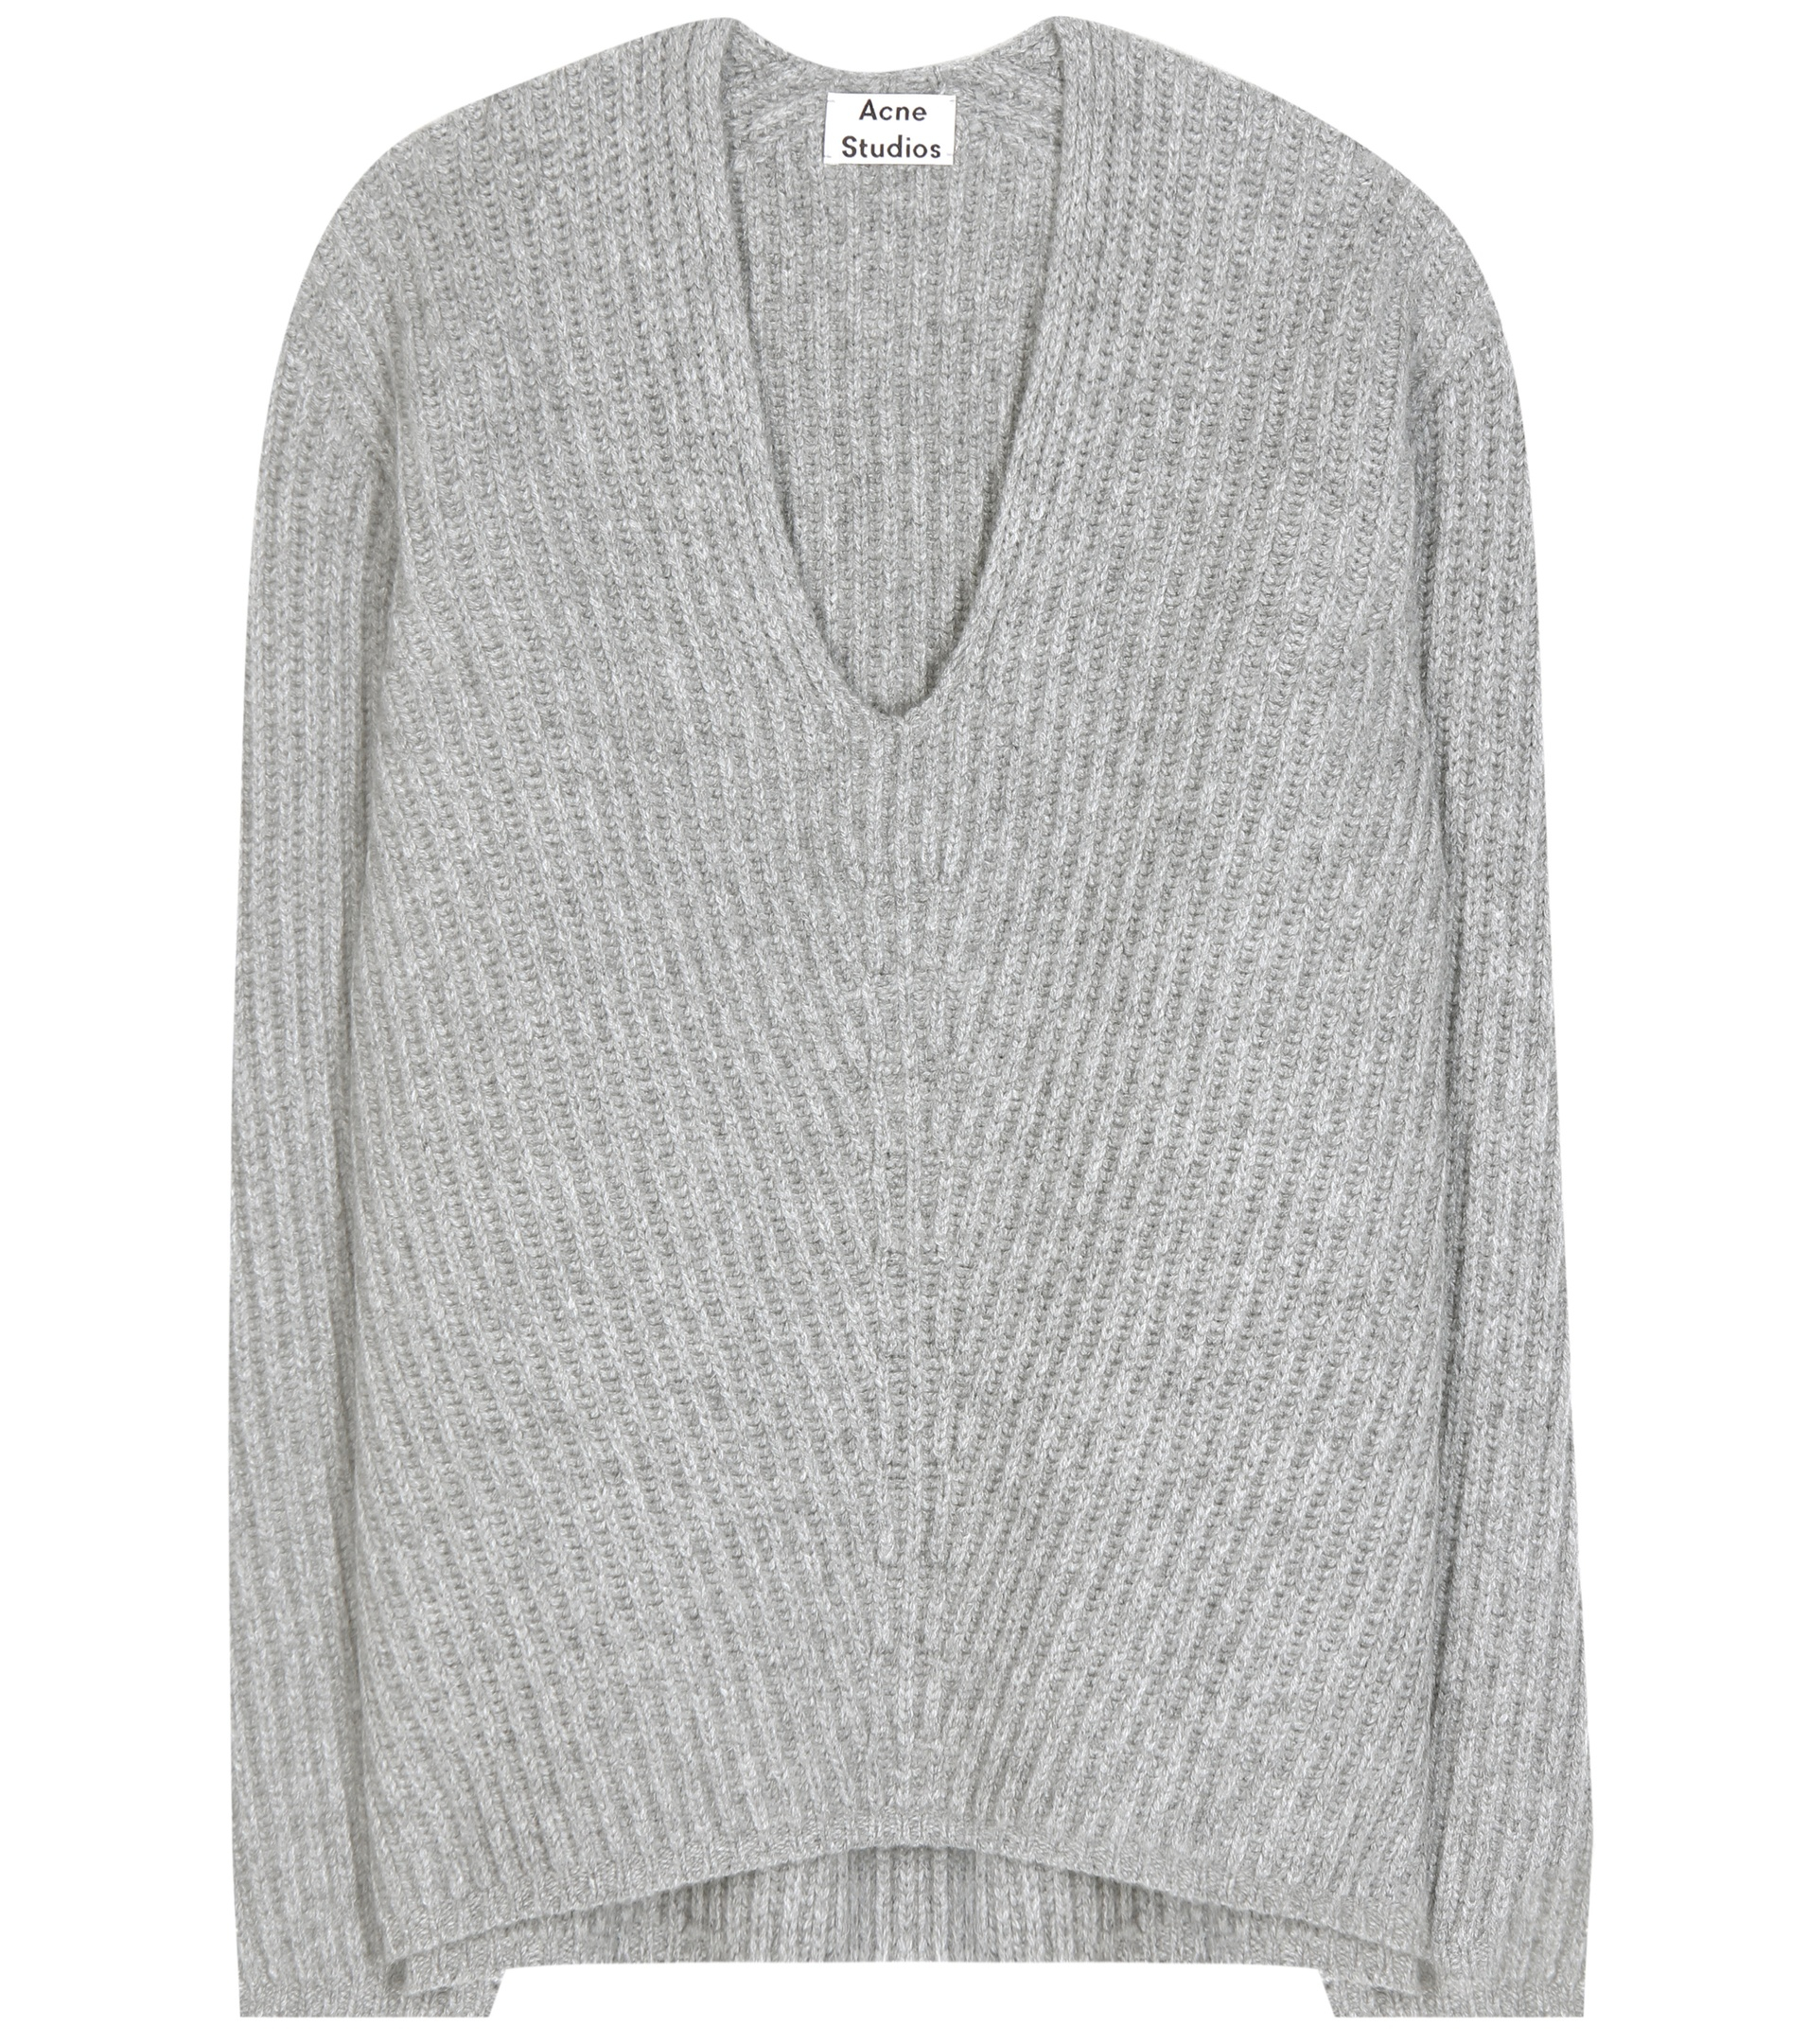 Acne Studios Deborah Wool Sweater in Grey (Gray) - Lyst